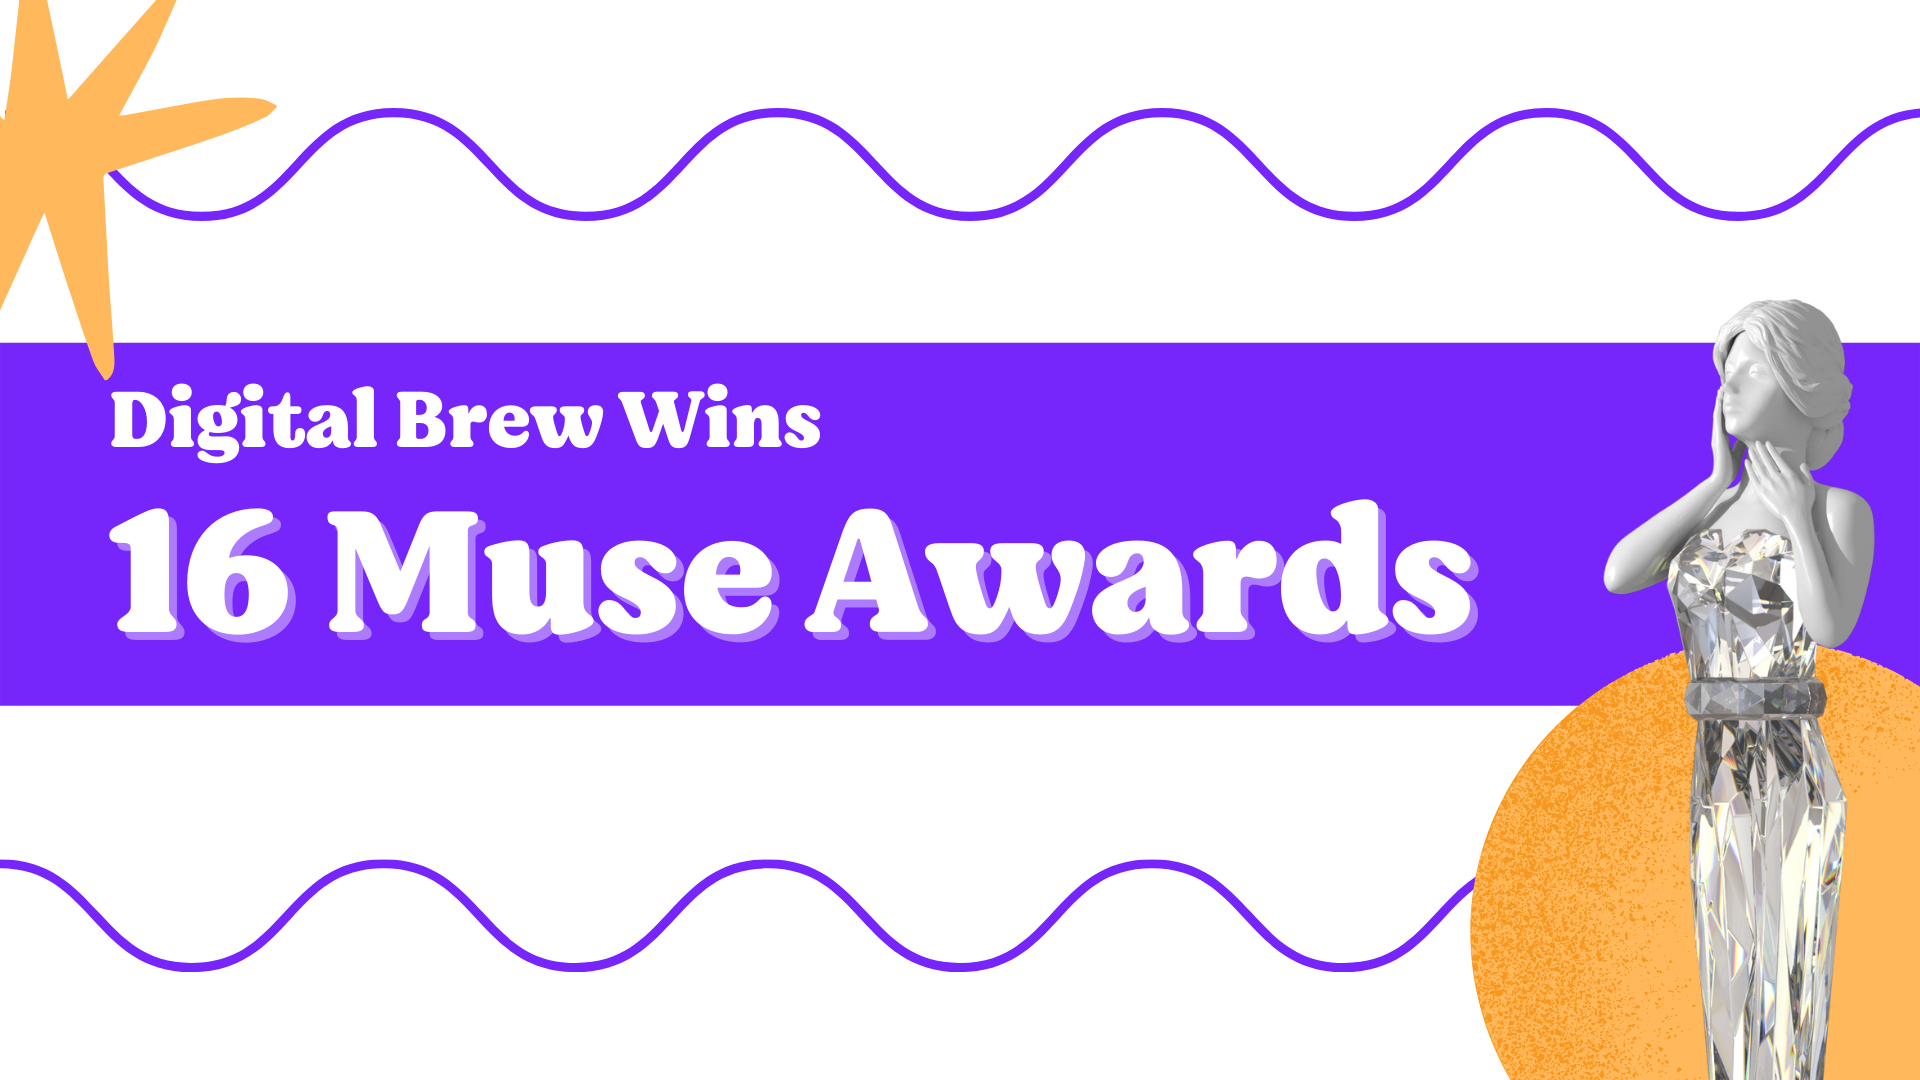 Digital Brew Wins 16 Muse Awards